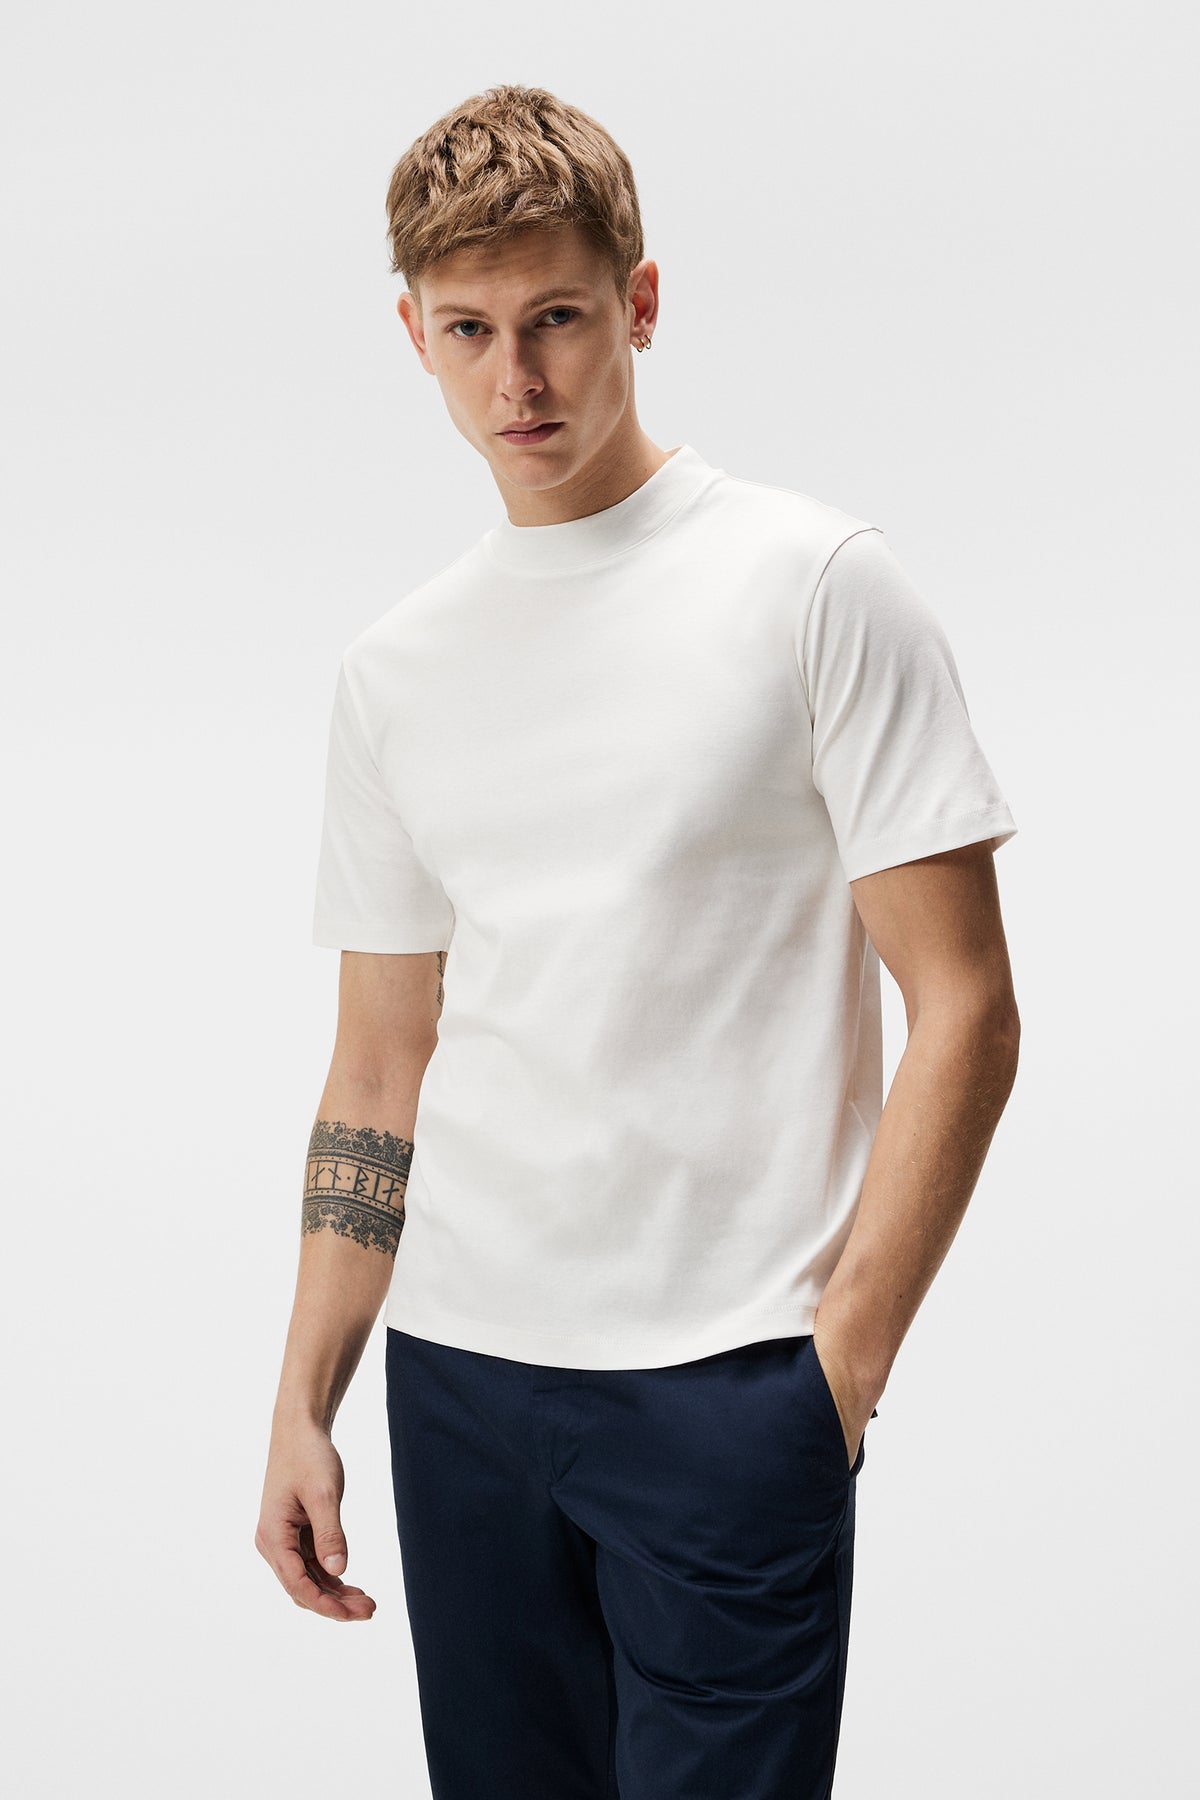 Wihion Mens Ribbed Mock Turtleneck T-Shirt Short Sleeve Solid Color T Shirts  Basic Tee Tops Black